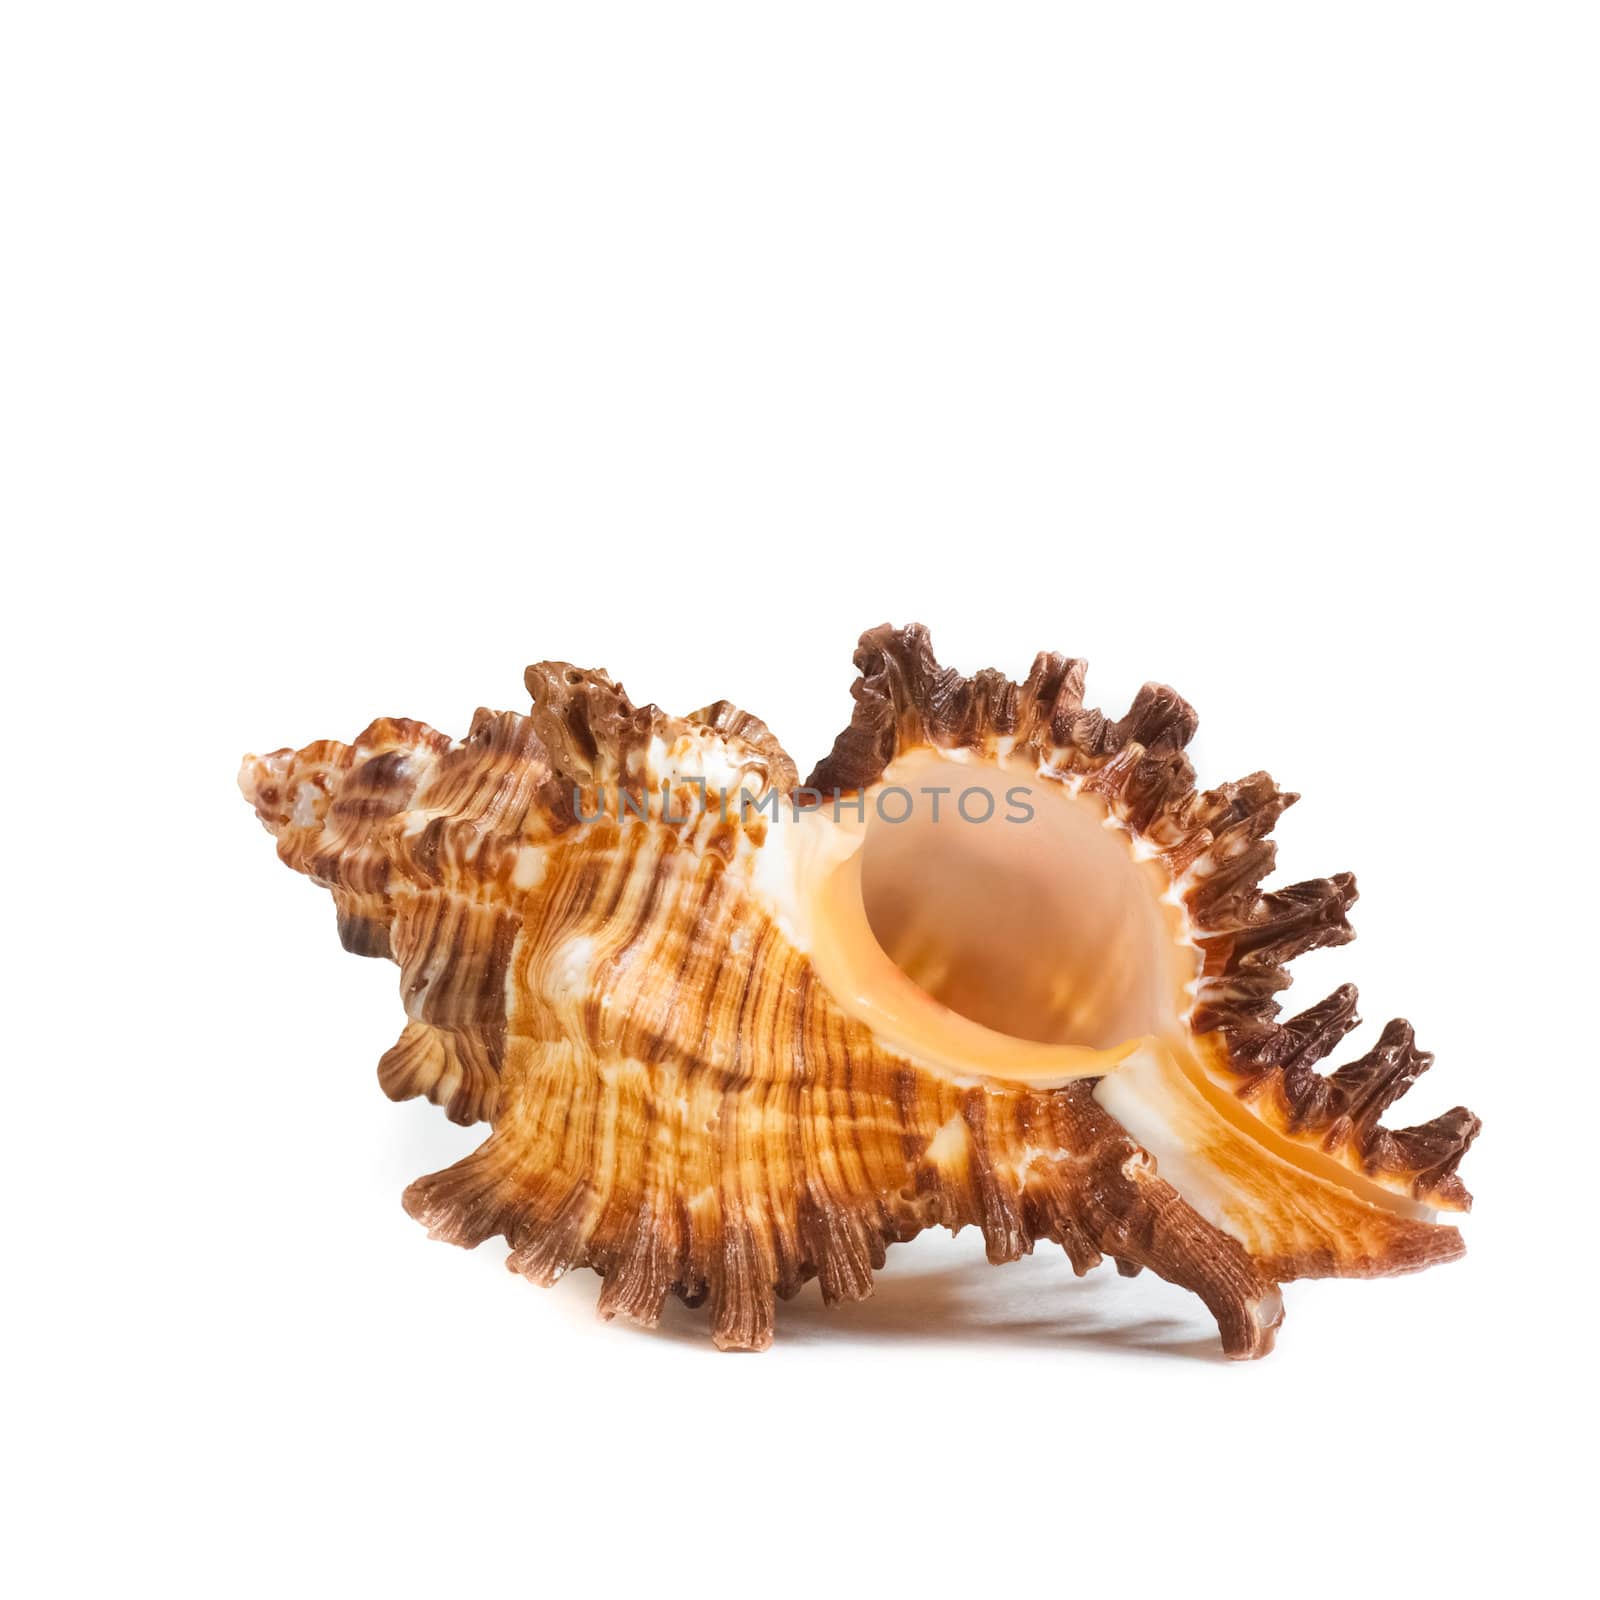 Seashell. Sea Cockleshell by ryhor